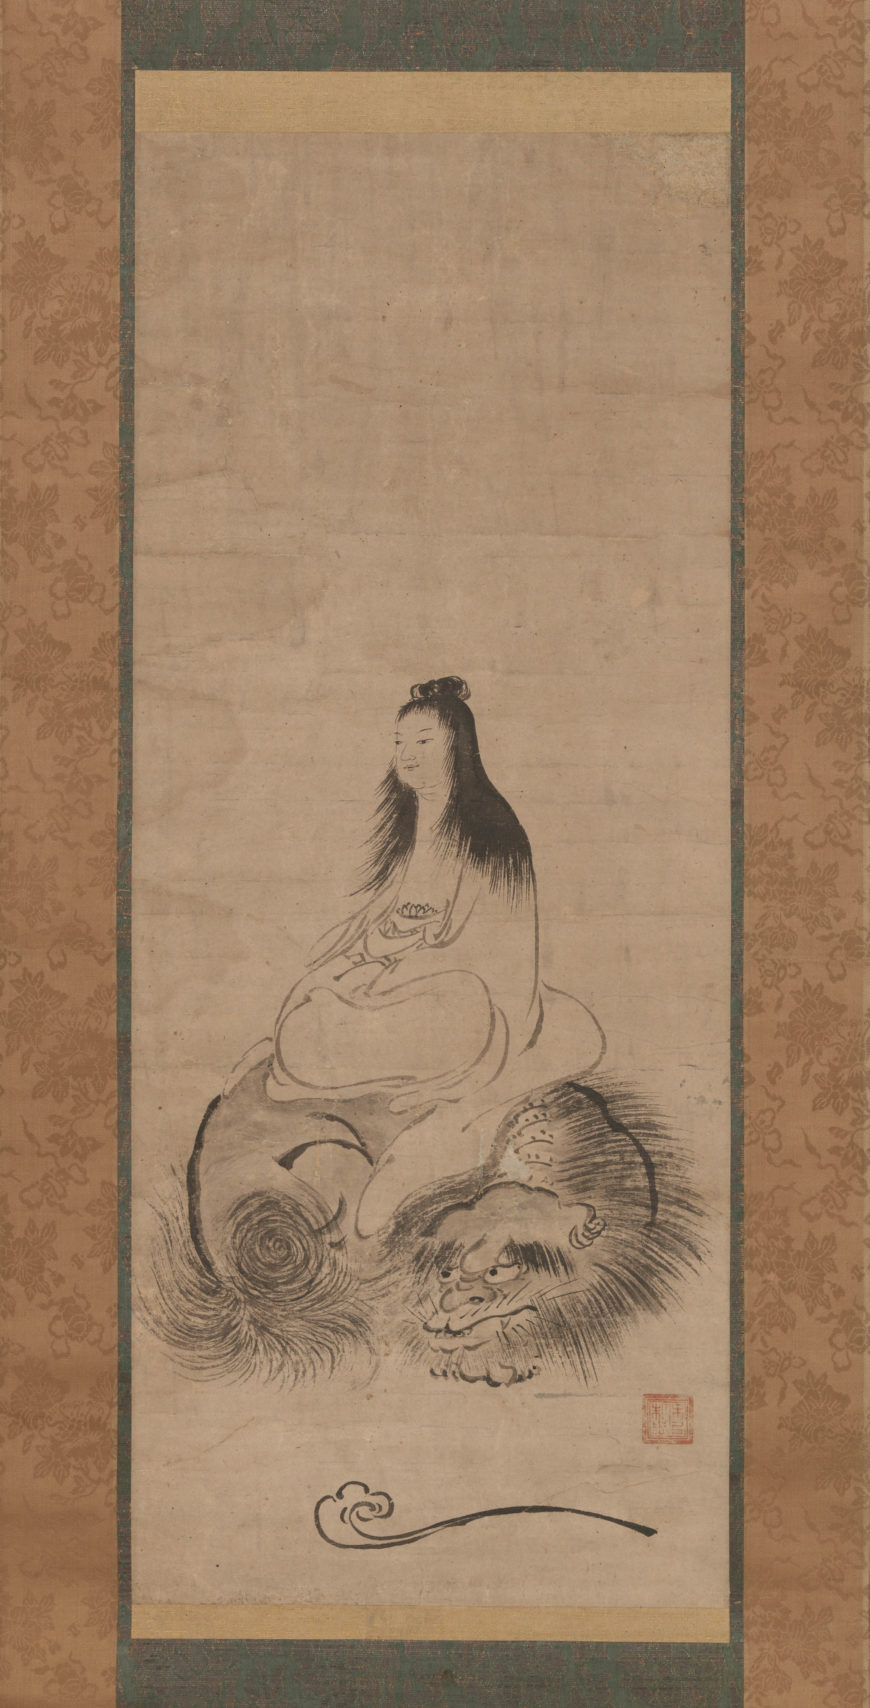 Shūsei, Monju (Manjusri) on a Lion, hanging scroll, late 15th century, Muromachi period, ink on paper, Japan, 81.5 × 33 cm (The Metropolitan Museum of Art) 